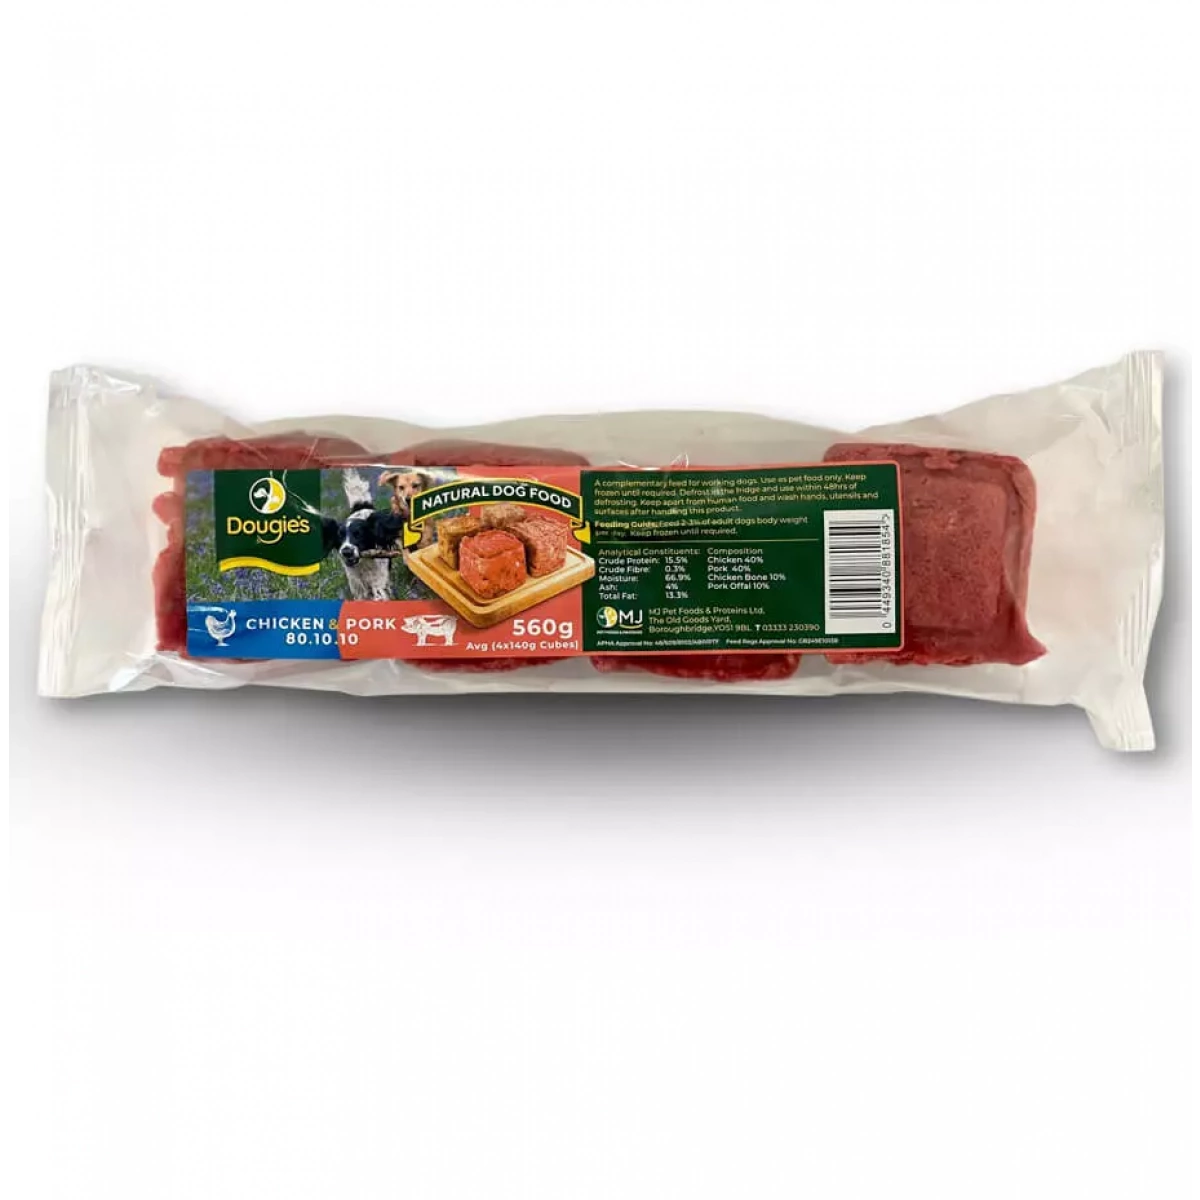 Dougie’s 80/10/10 – Chicken & Pork 140g – Pawfect Supplies Ltd Product Image